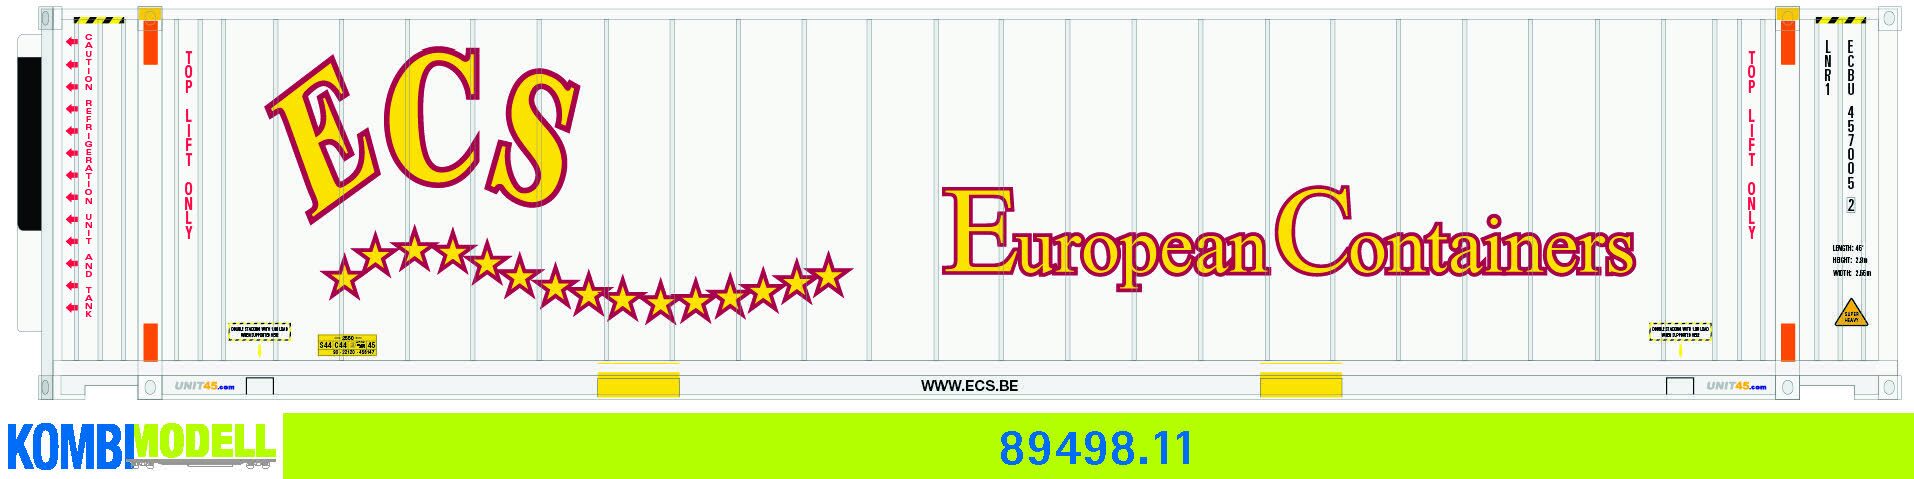 Kombimodell 89498.11 WB-A /Ct 45' (Euro) Reefer (DE) ECS" (Logo gross)" #ECBU 457005